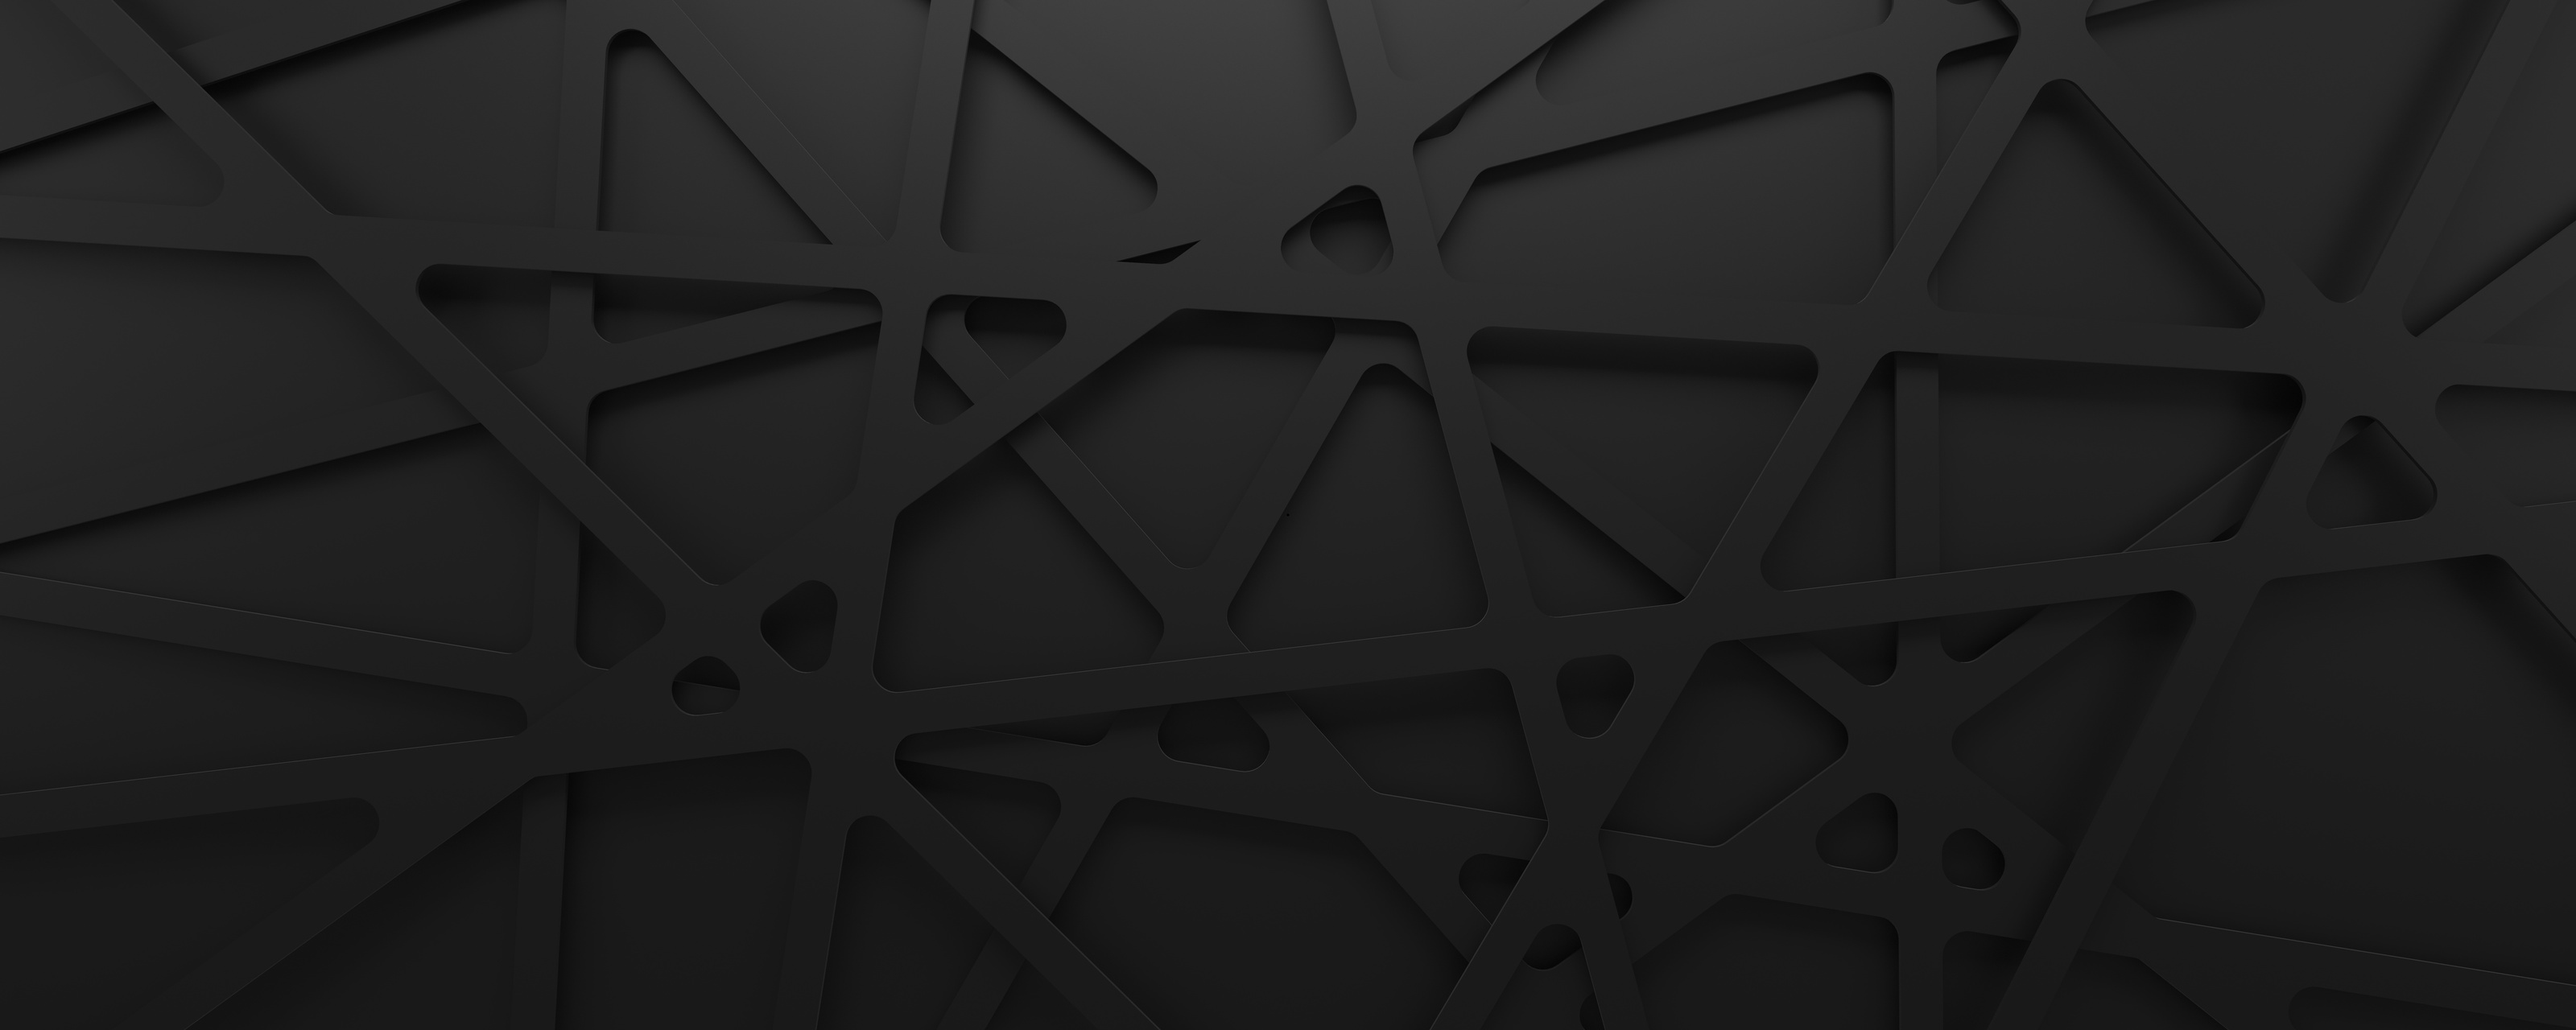 Texture Geometric Black Background